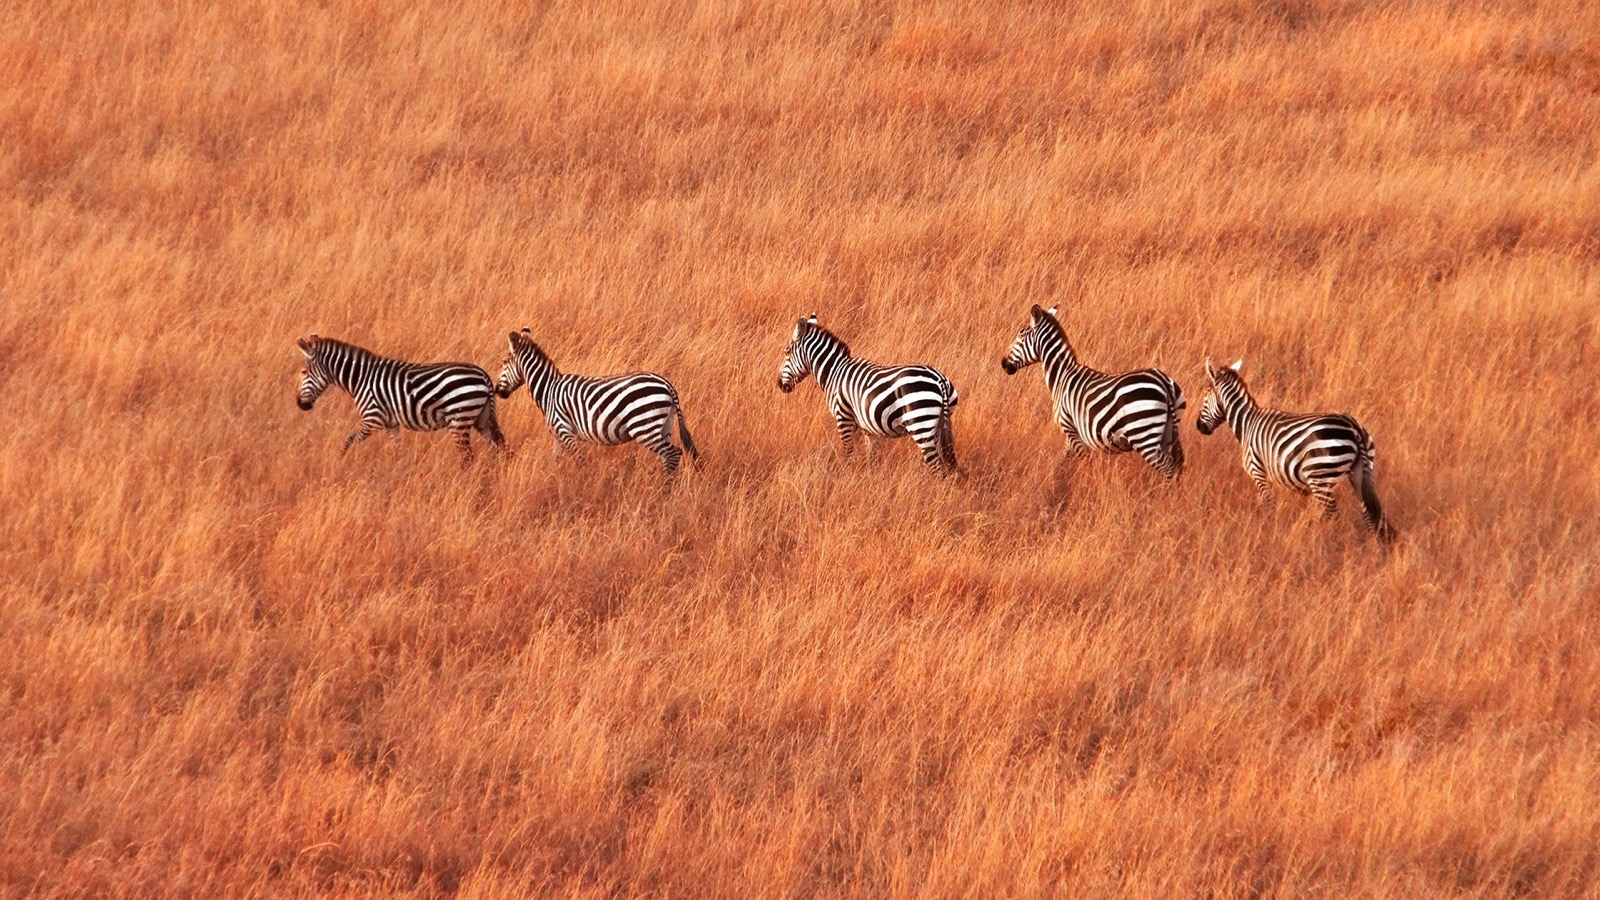 African Countries Quiz Zebras at Maasai Mara savanna, Kenya